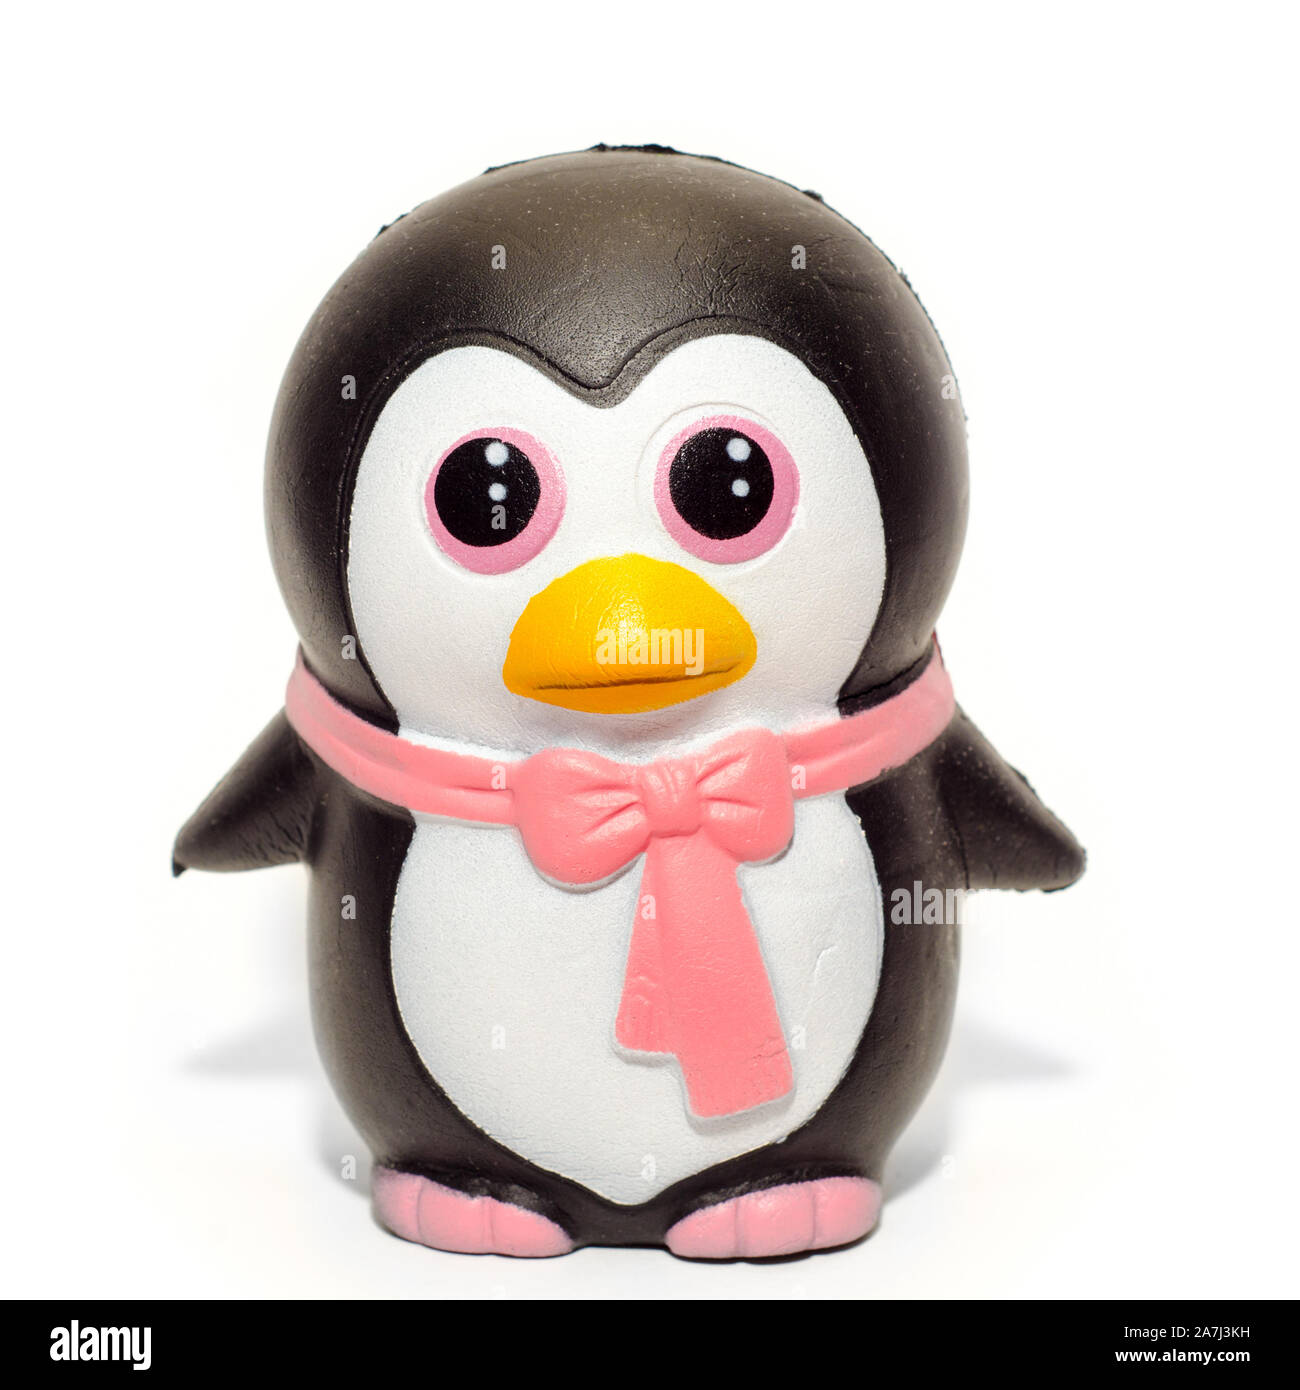 Toy Penguin Immagini e Fotos Stock - Alamy